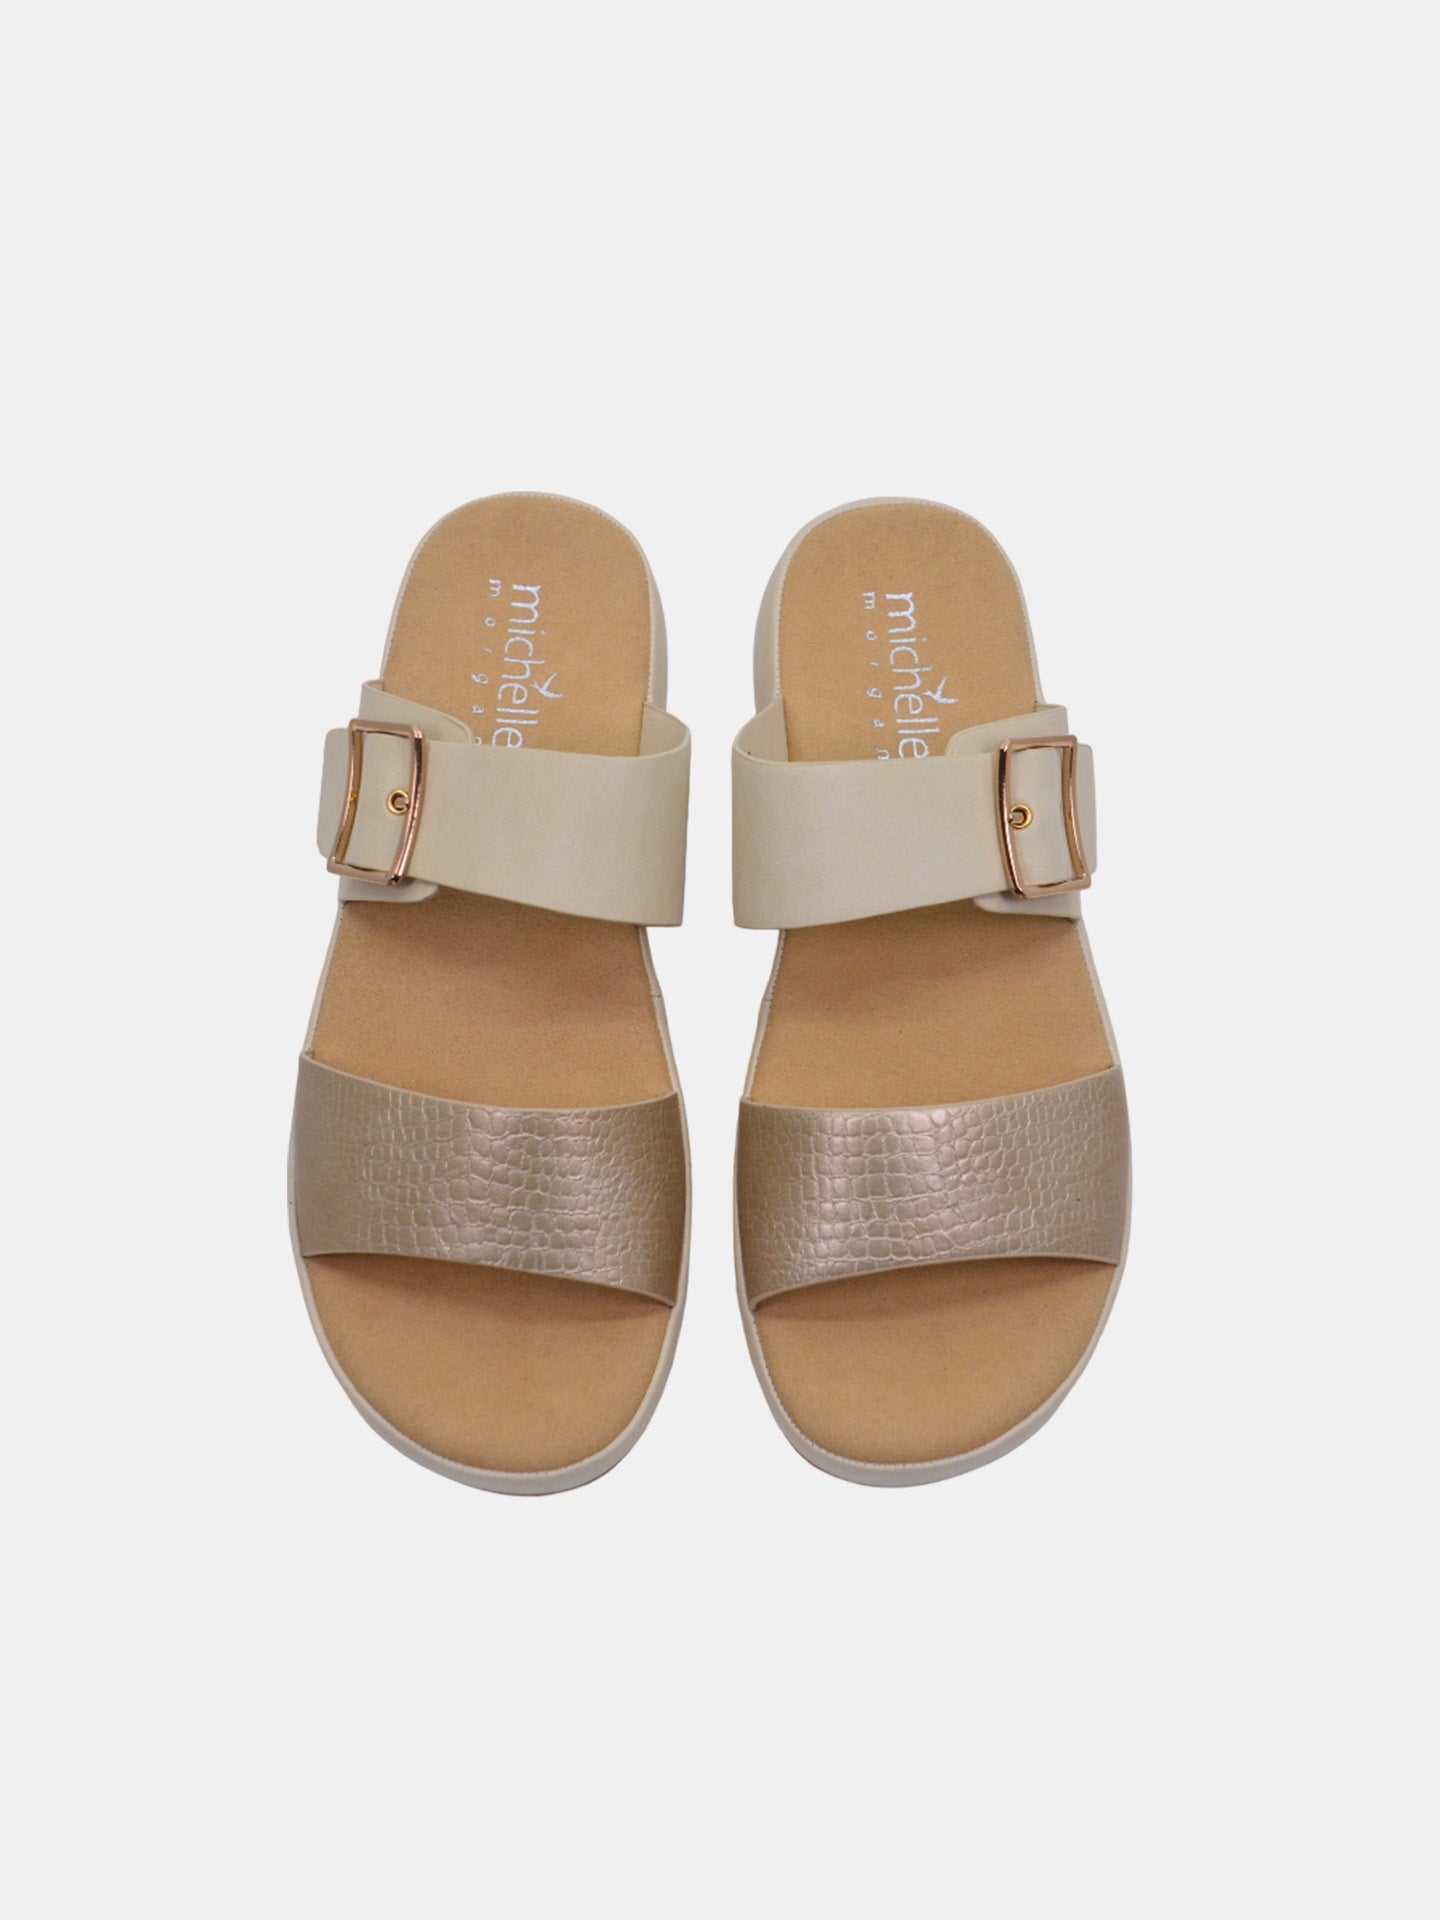 Michelle Morgan 114RL191 Women's Flat Sandals #color_Gold